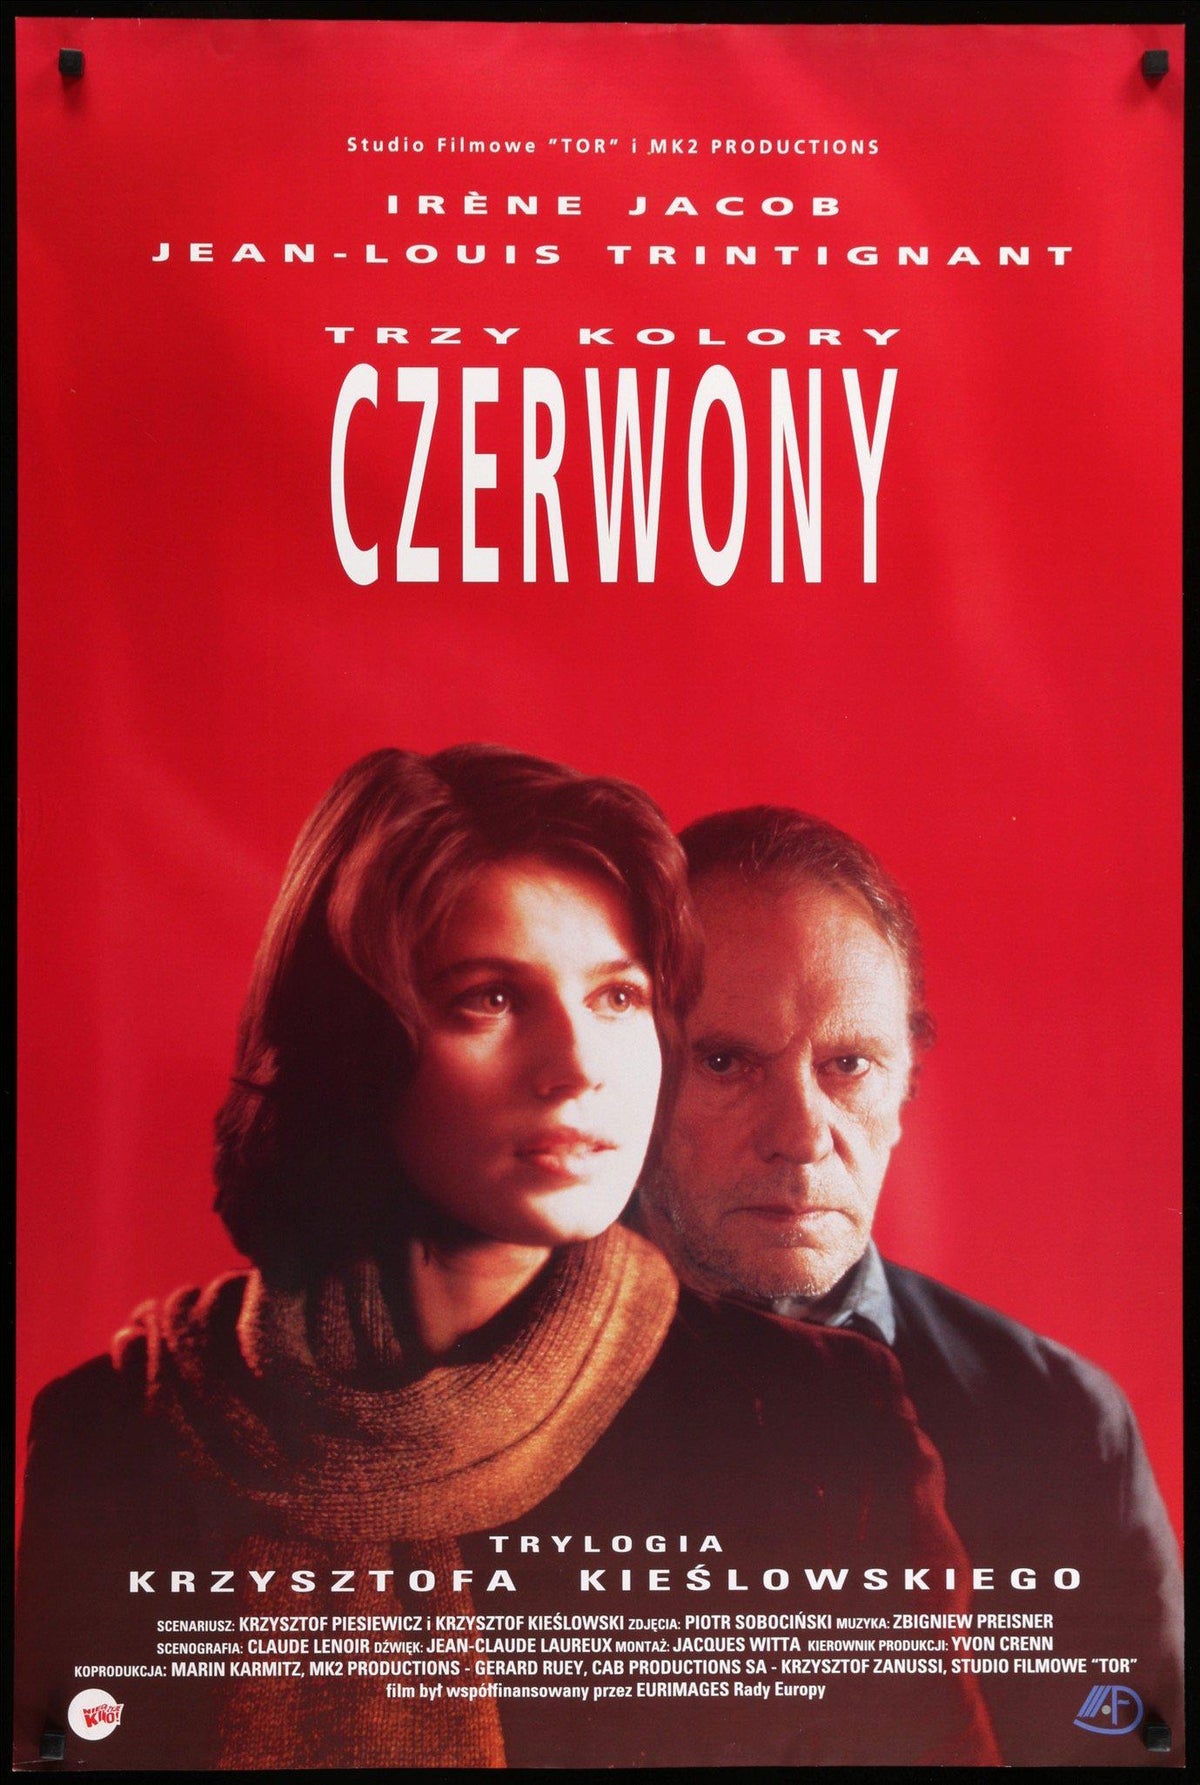 Red (1994) original movie poster for sale at Original Film Art